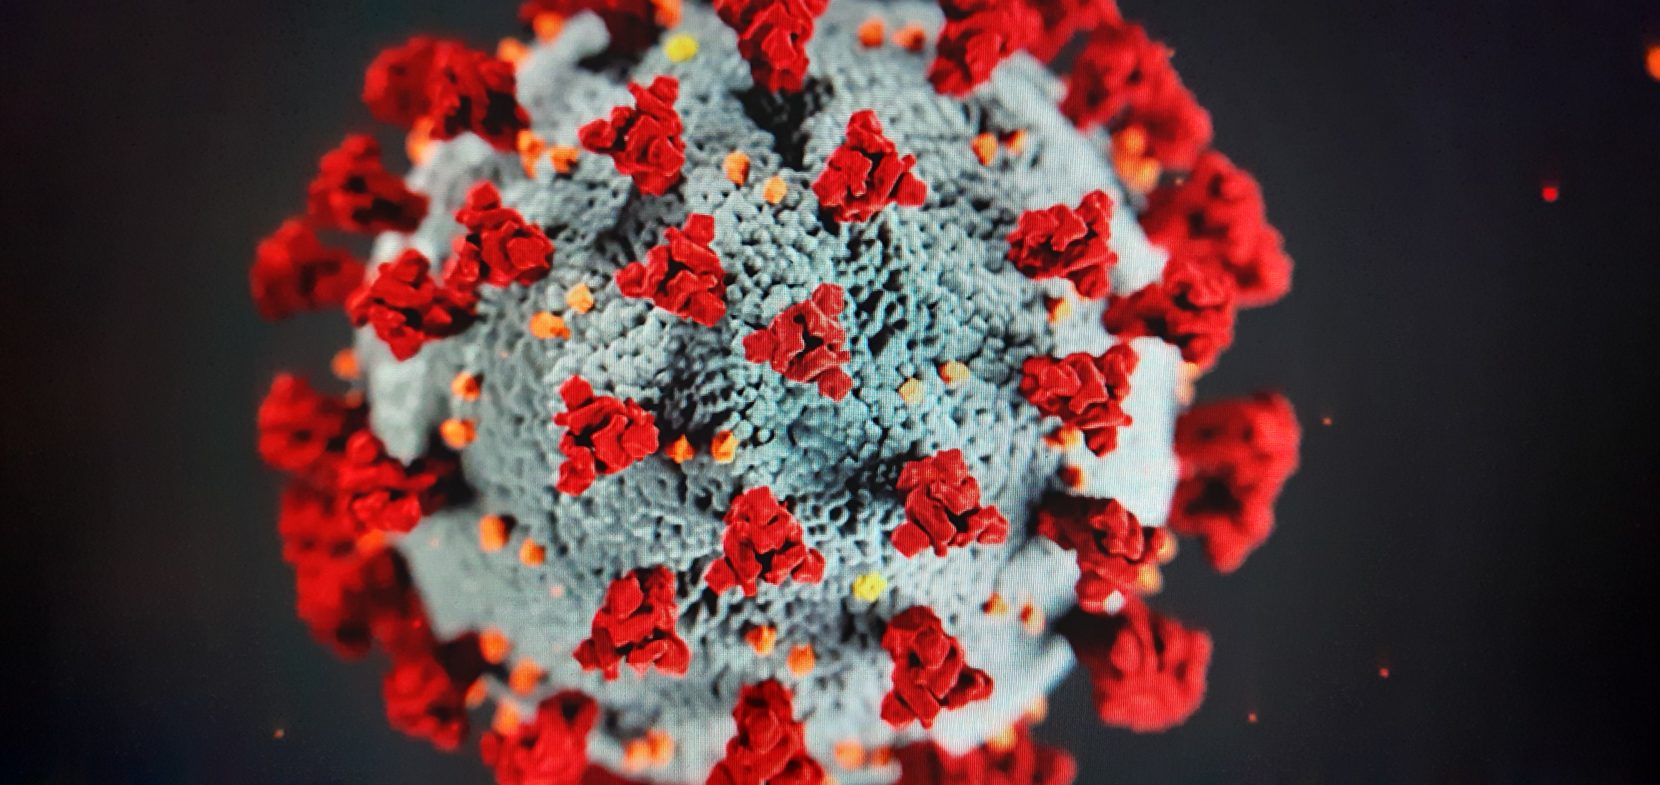 Aktuelle Situation: Coronavirus-Pandemie